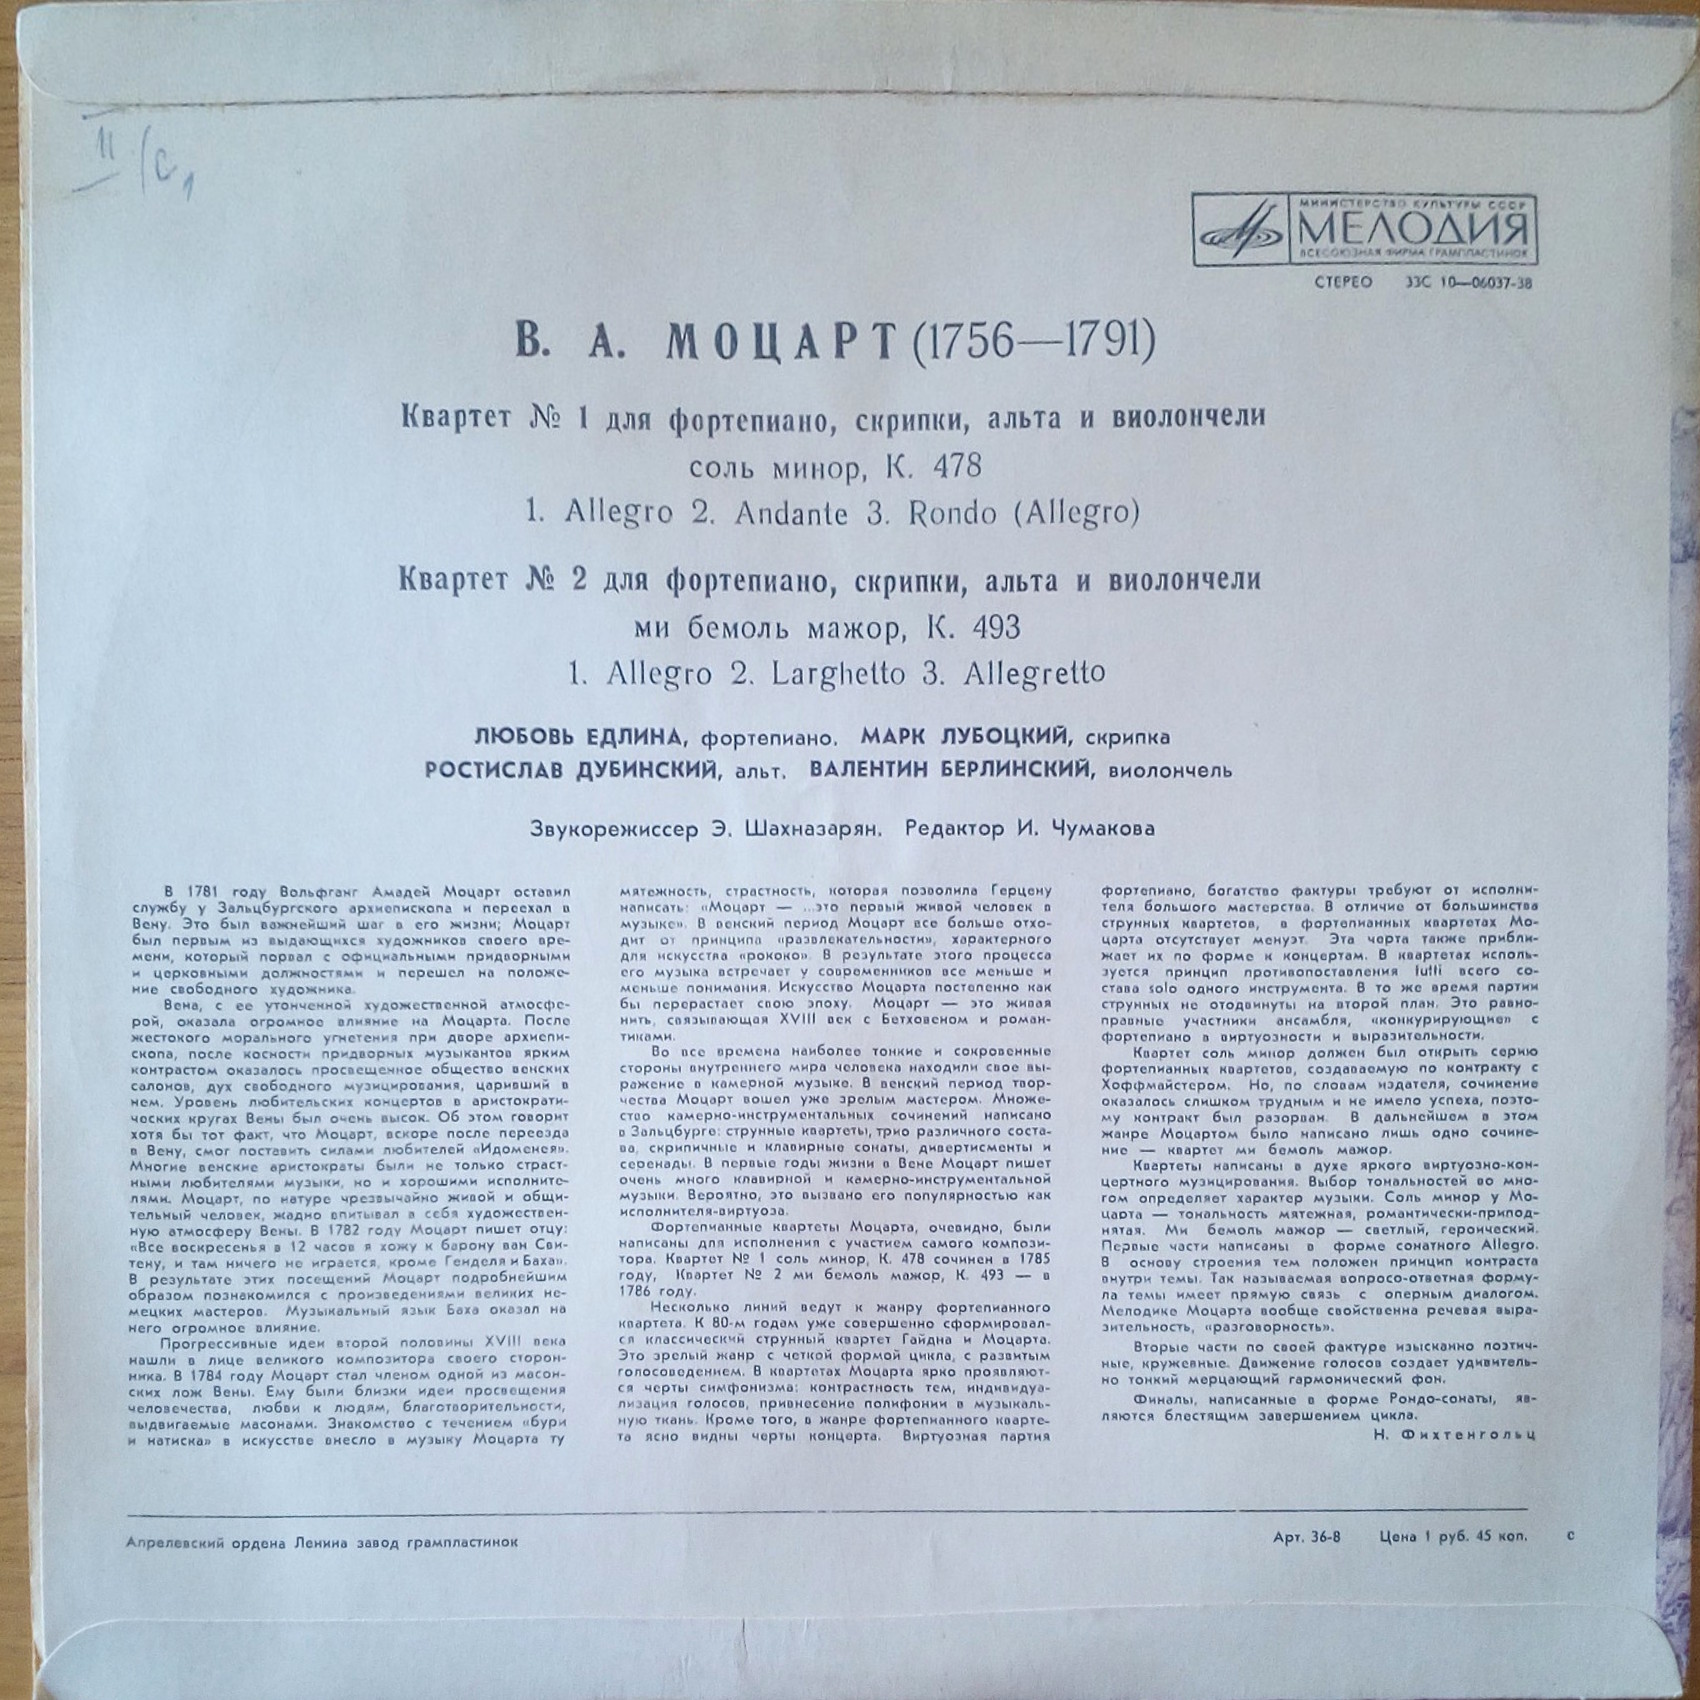 B. А. МОЦАРТ (1756-1791): Квартеты для ф-но, скрипки, альта и виолончели